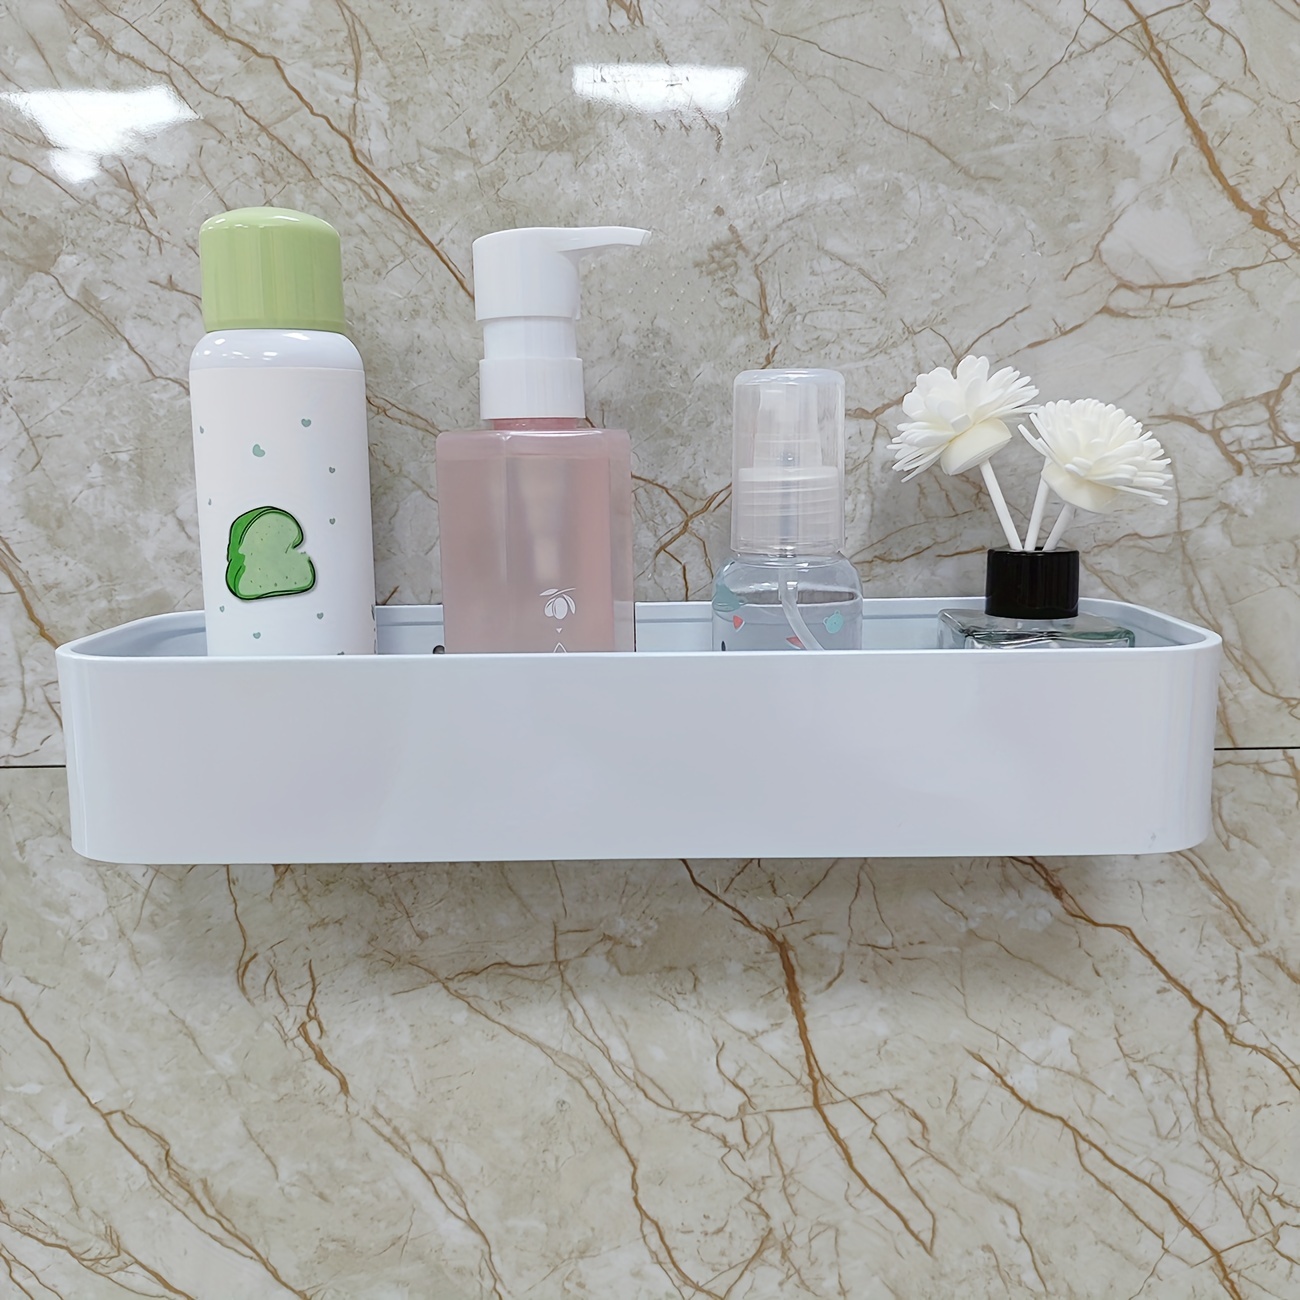 Matte Black Shower Pole Tray Storage Shelf Rack ABS Bathroom Shower Gel  Shampoo Holder With Shower